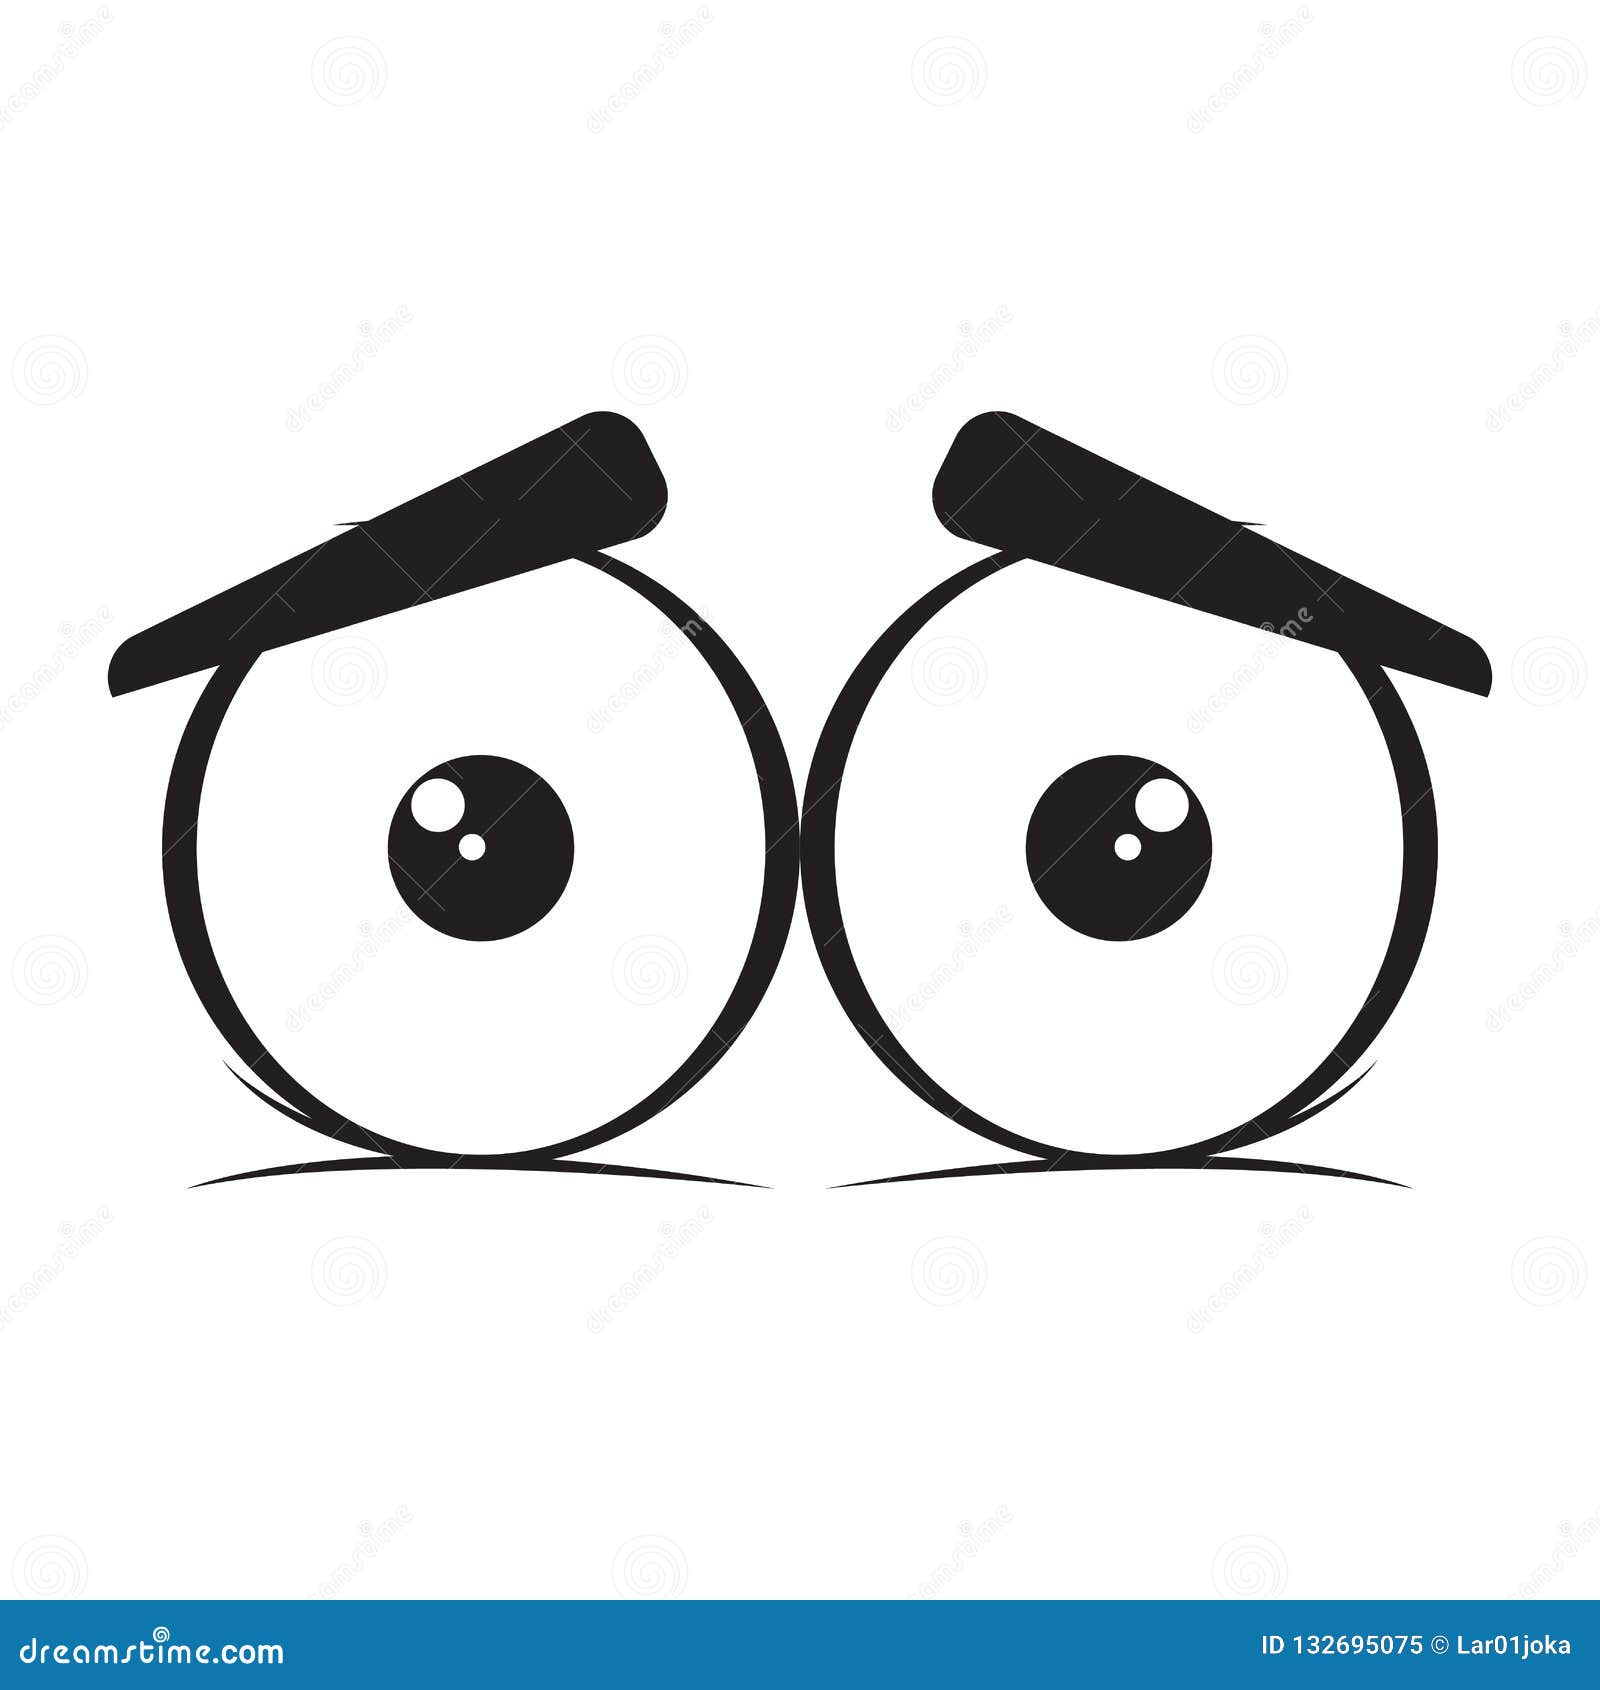 Sad eyes cartoon stock vector. Illustration of clipart - 132695075